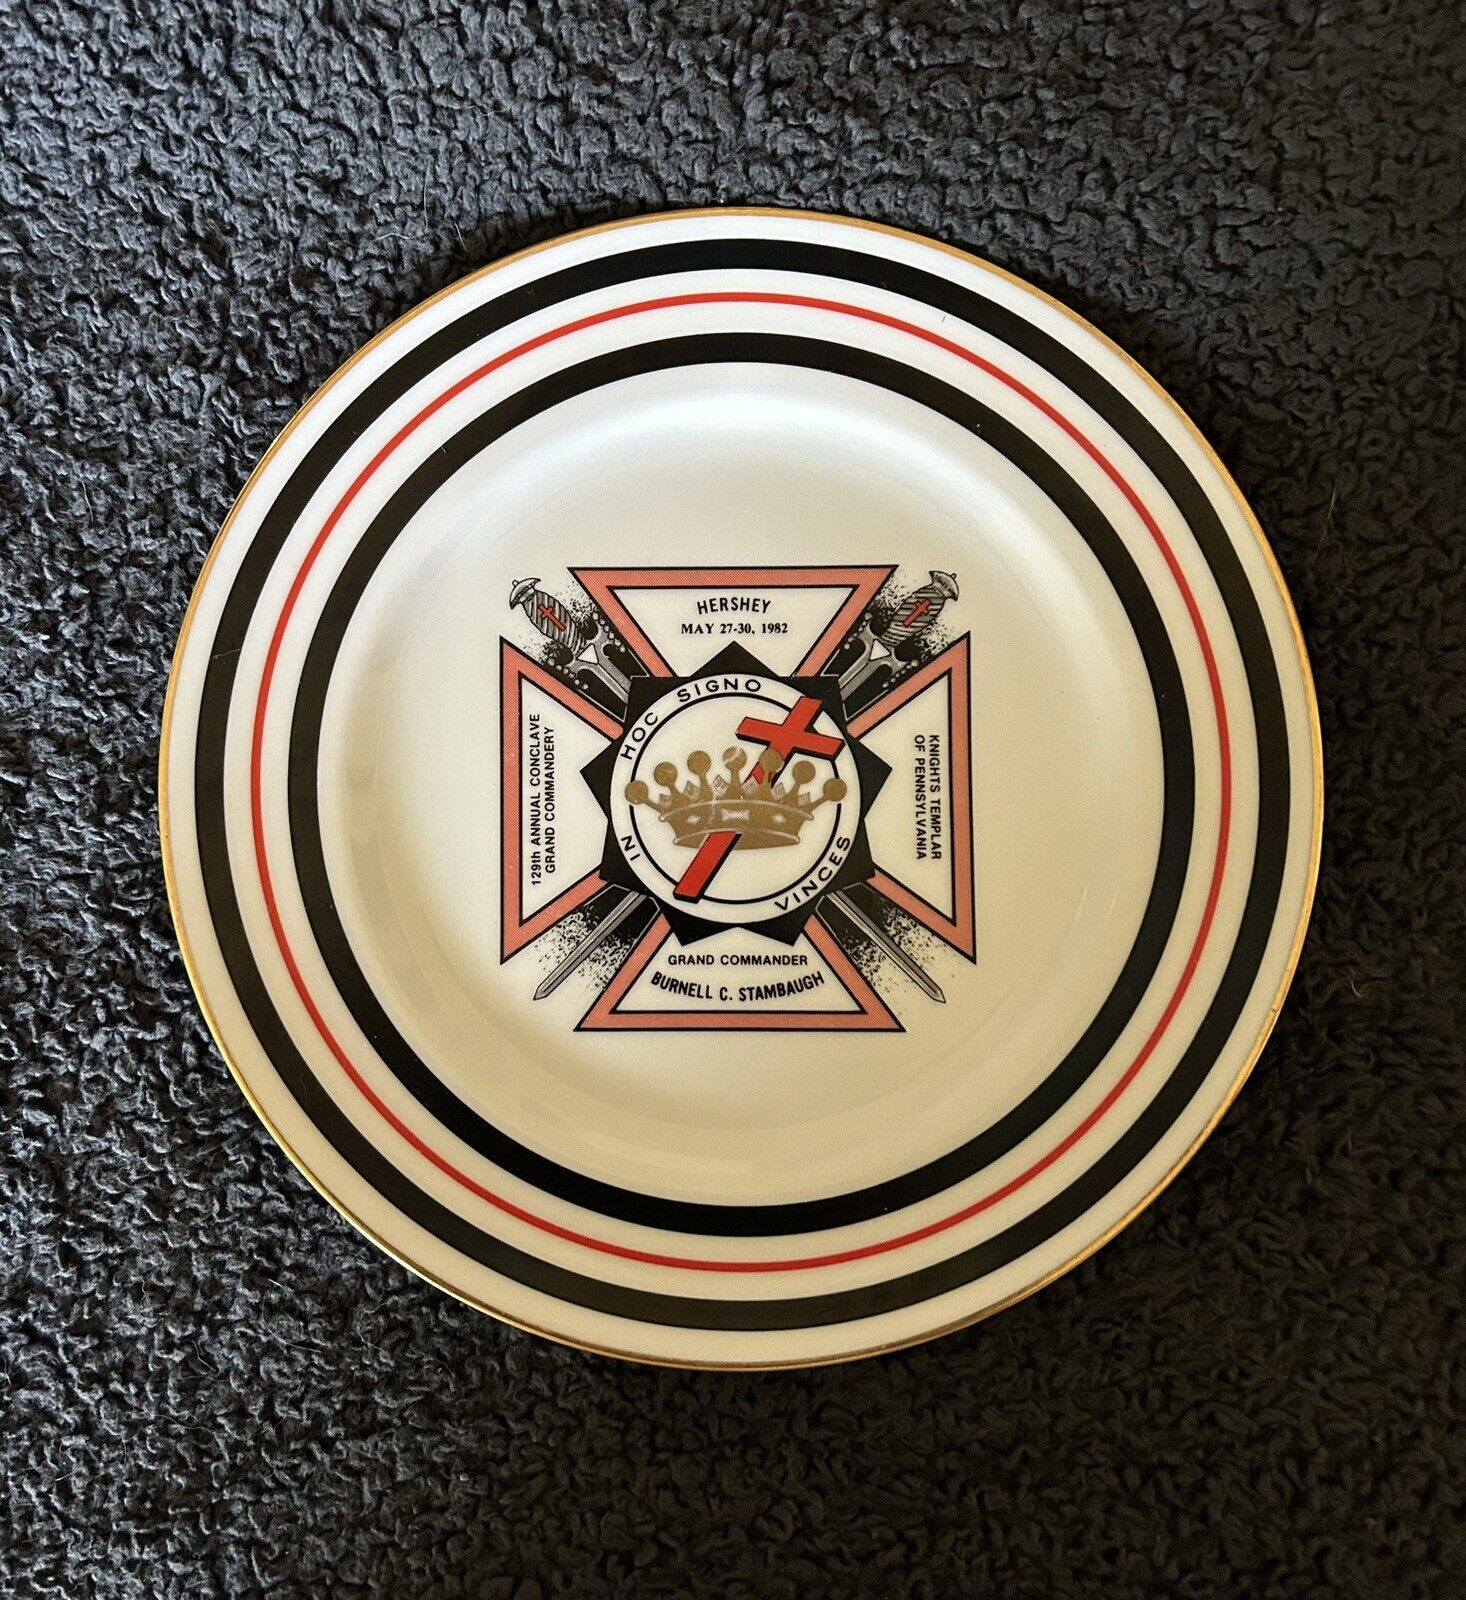 Knights Templar Commemorative Plate-Hershey, Pennsylvania-1982